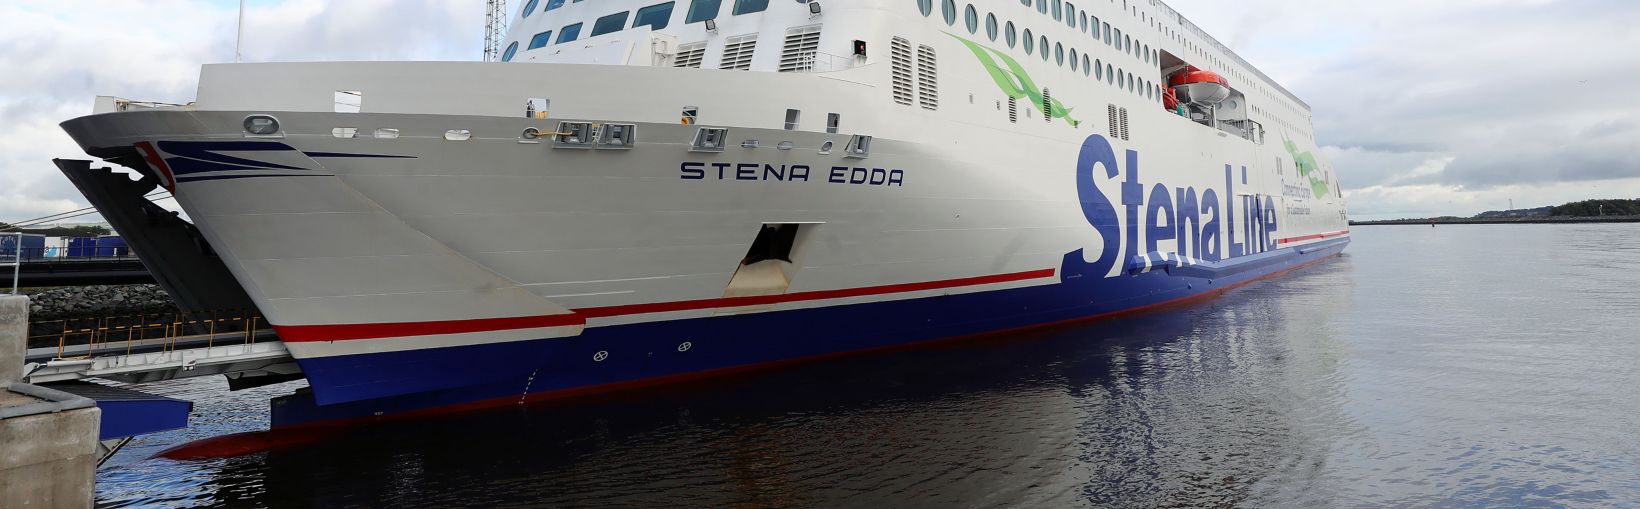 Fergen Stena Edda dokksatt i Belfast havn